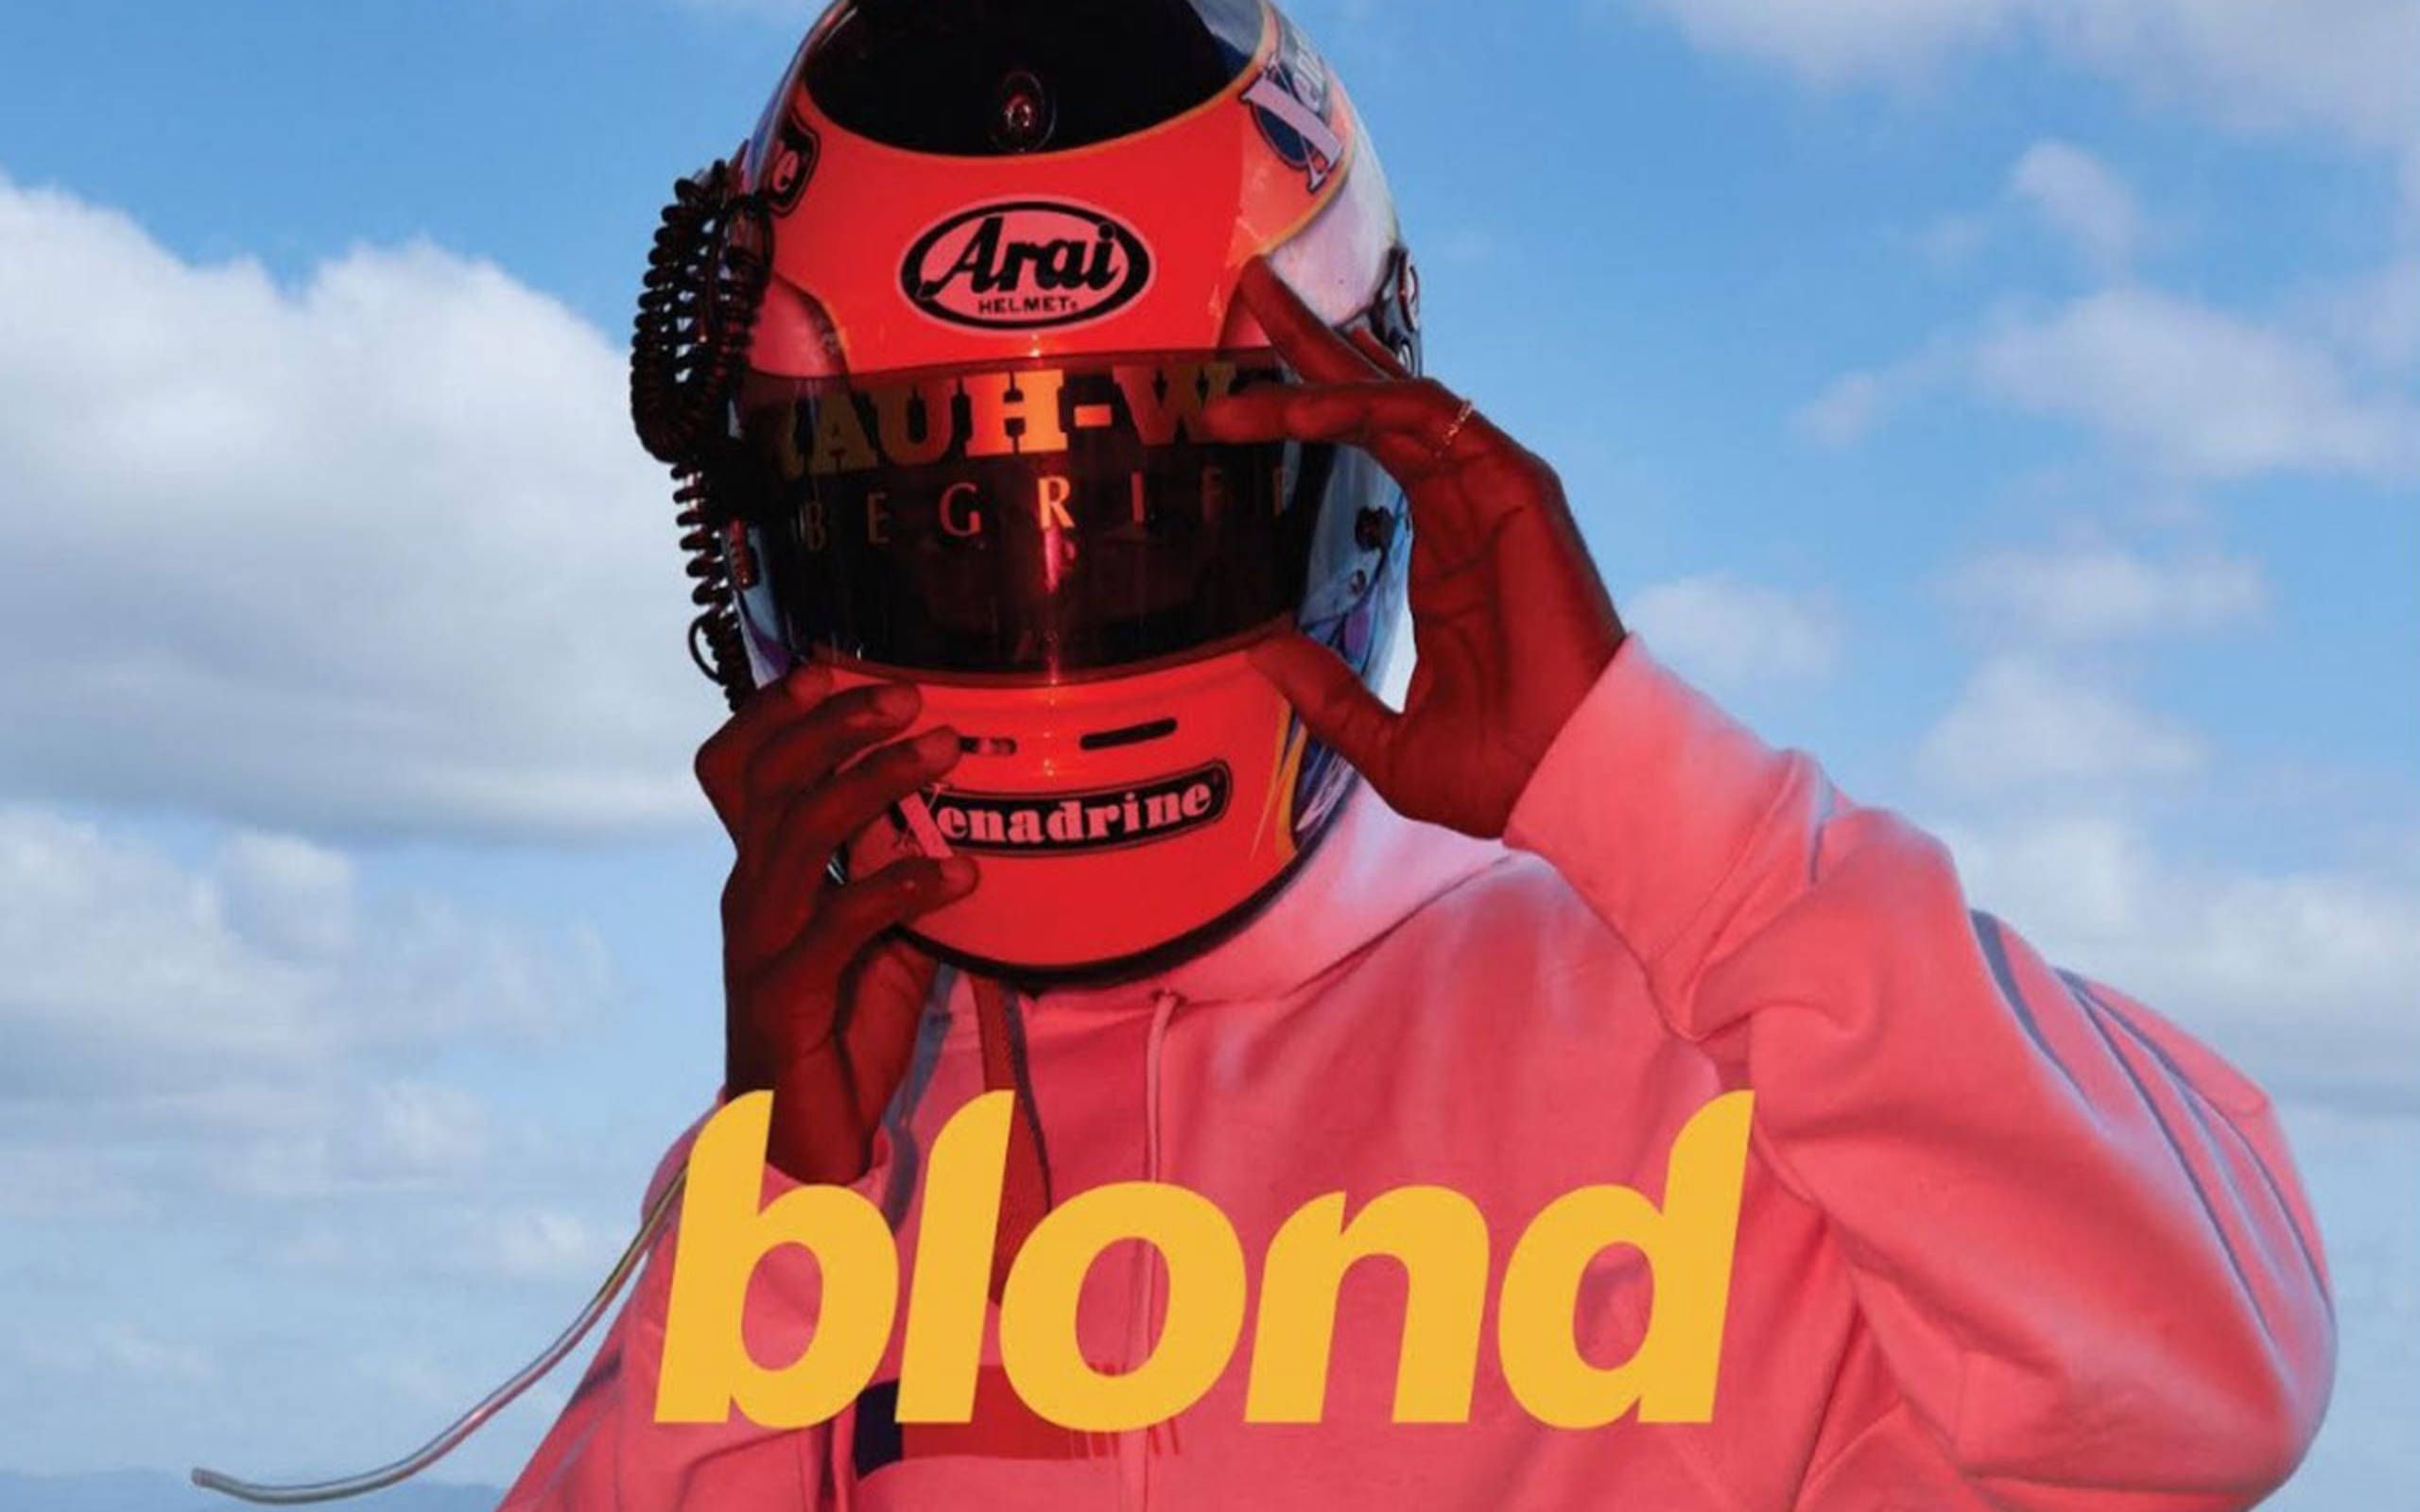 Car Culture Today: Frank Ocean's Blond